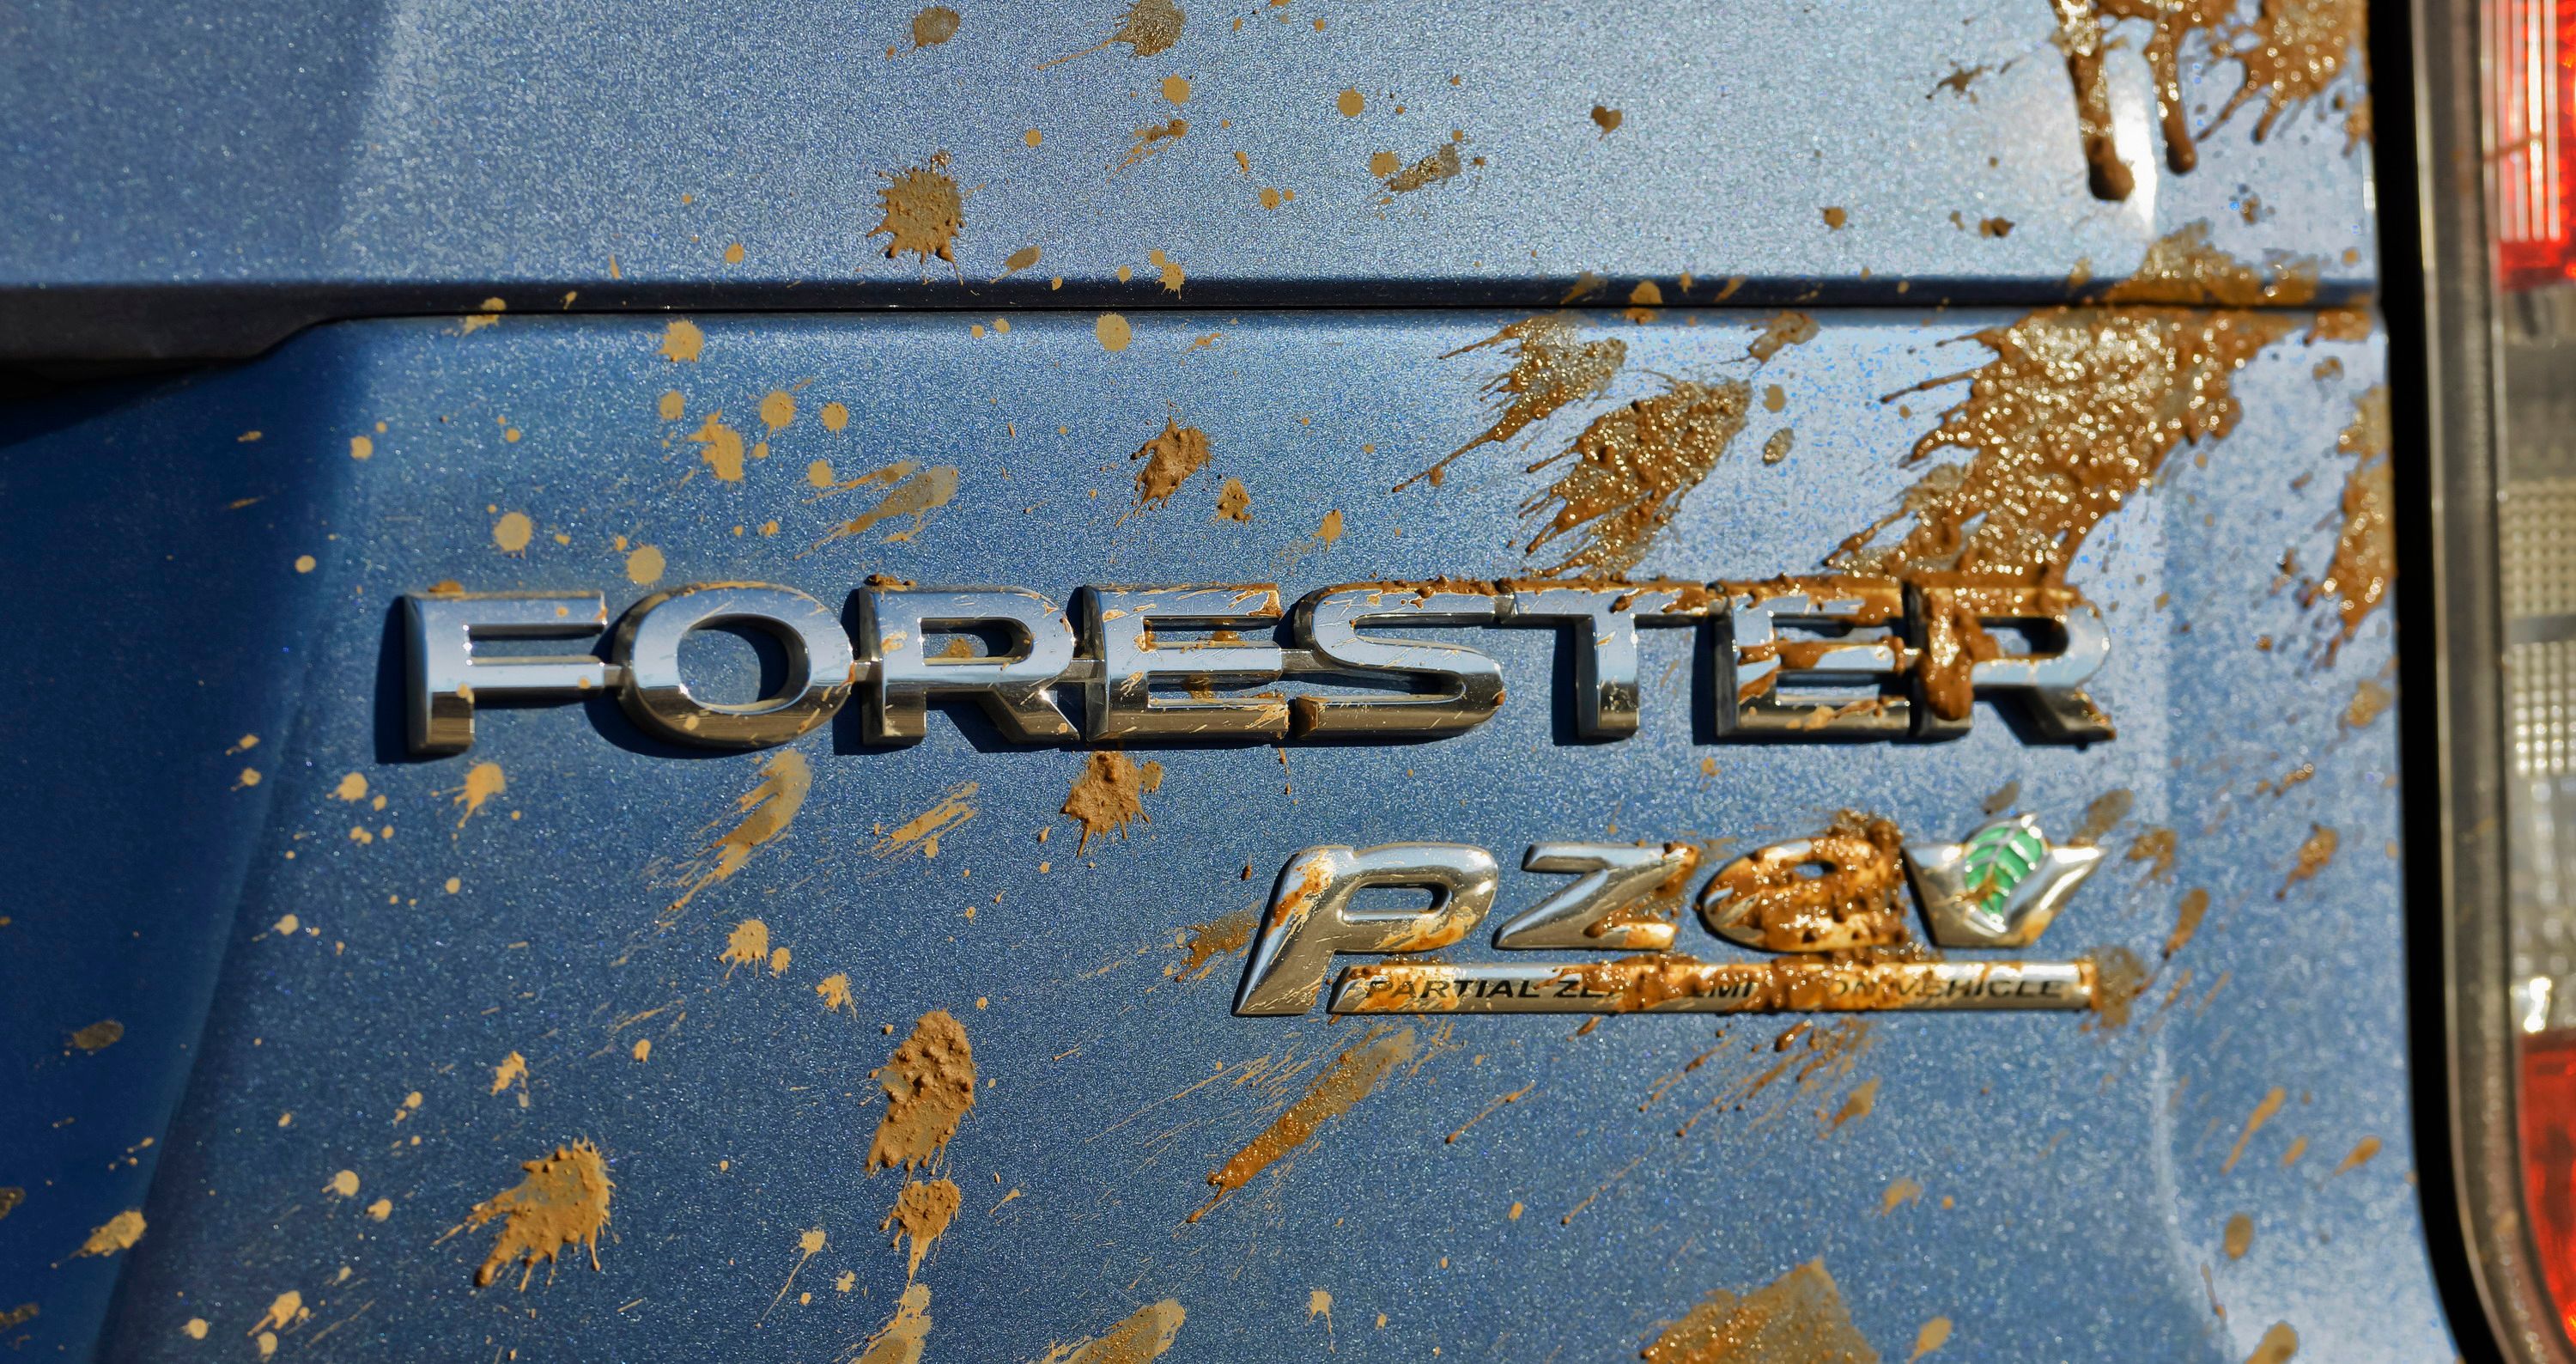 2015 - 2017 Subaru Forester